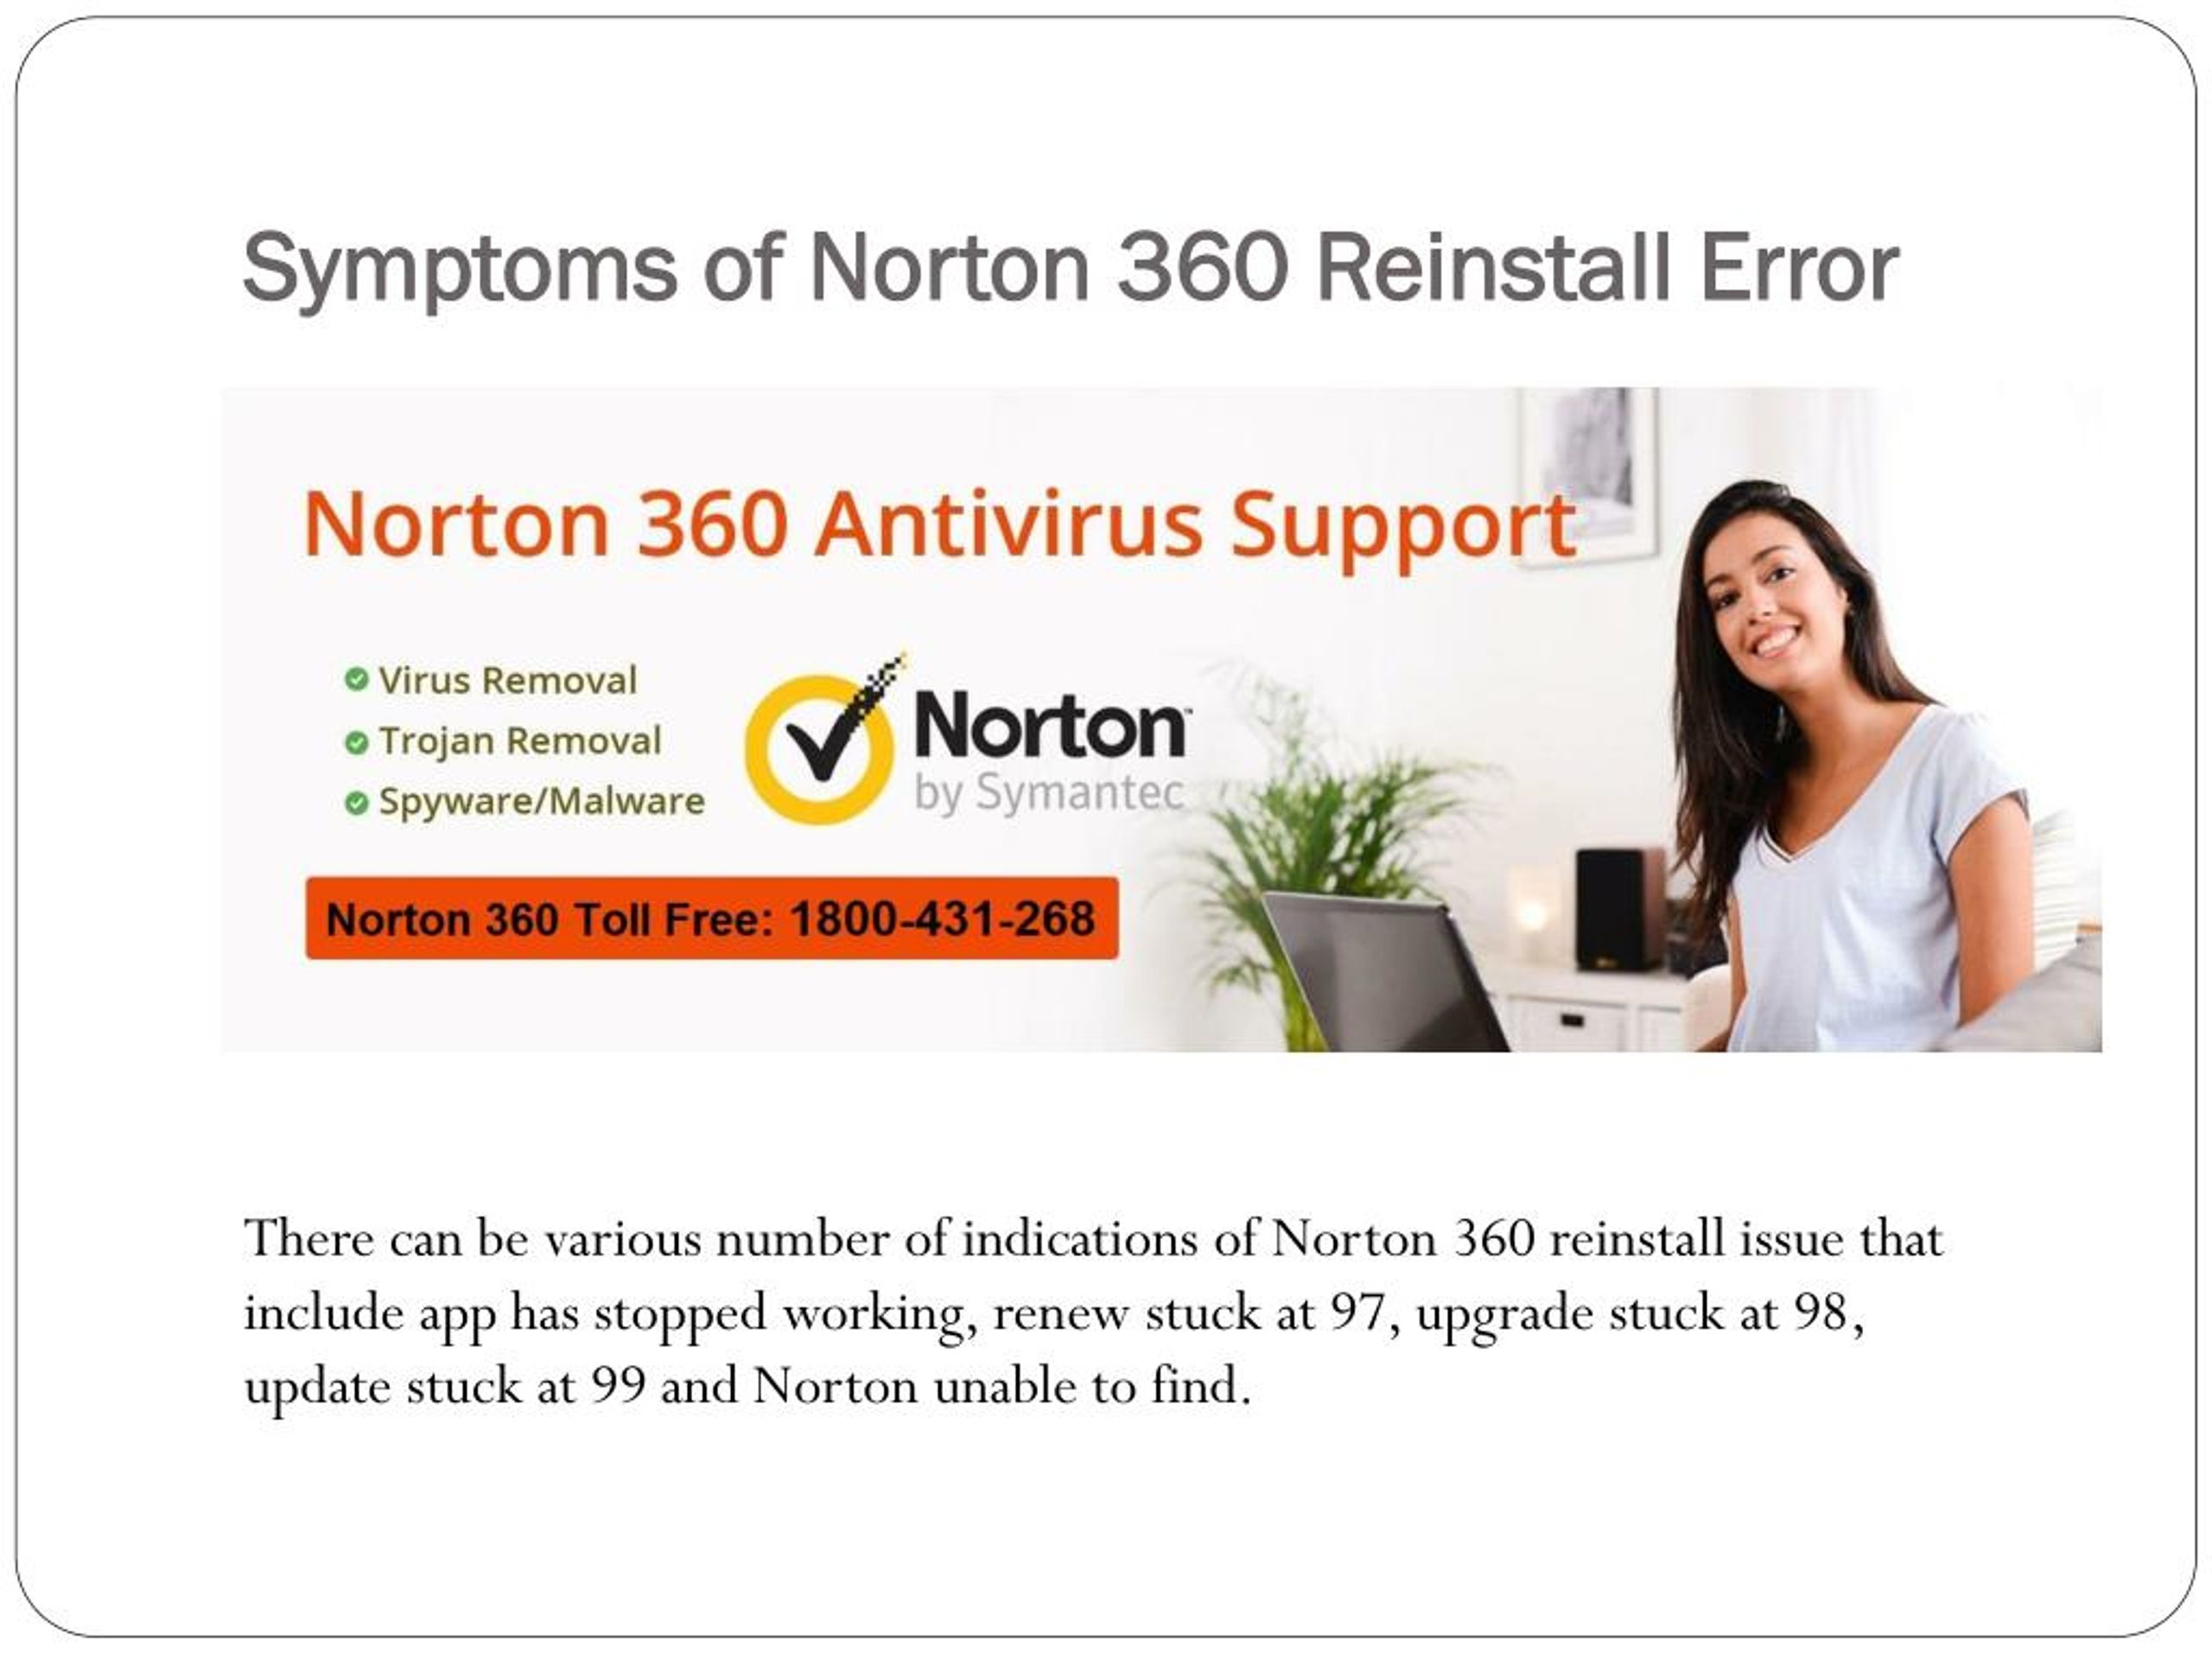 remove and reinstall norton